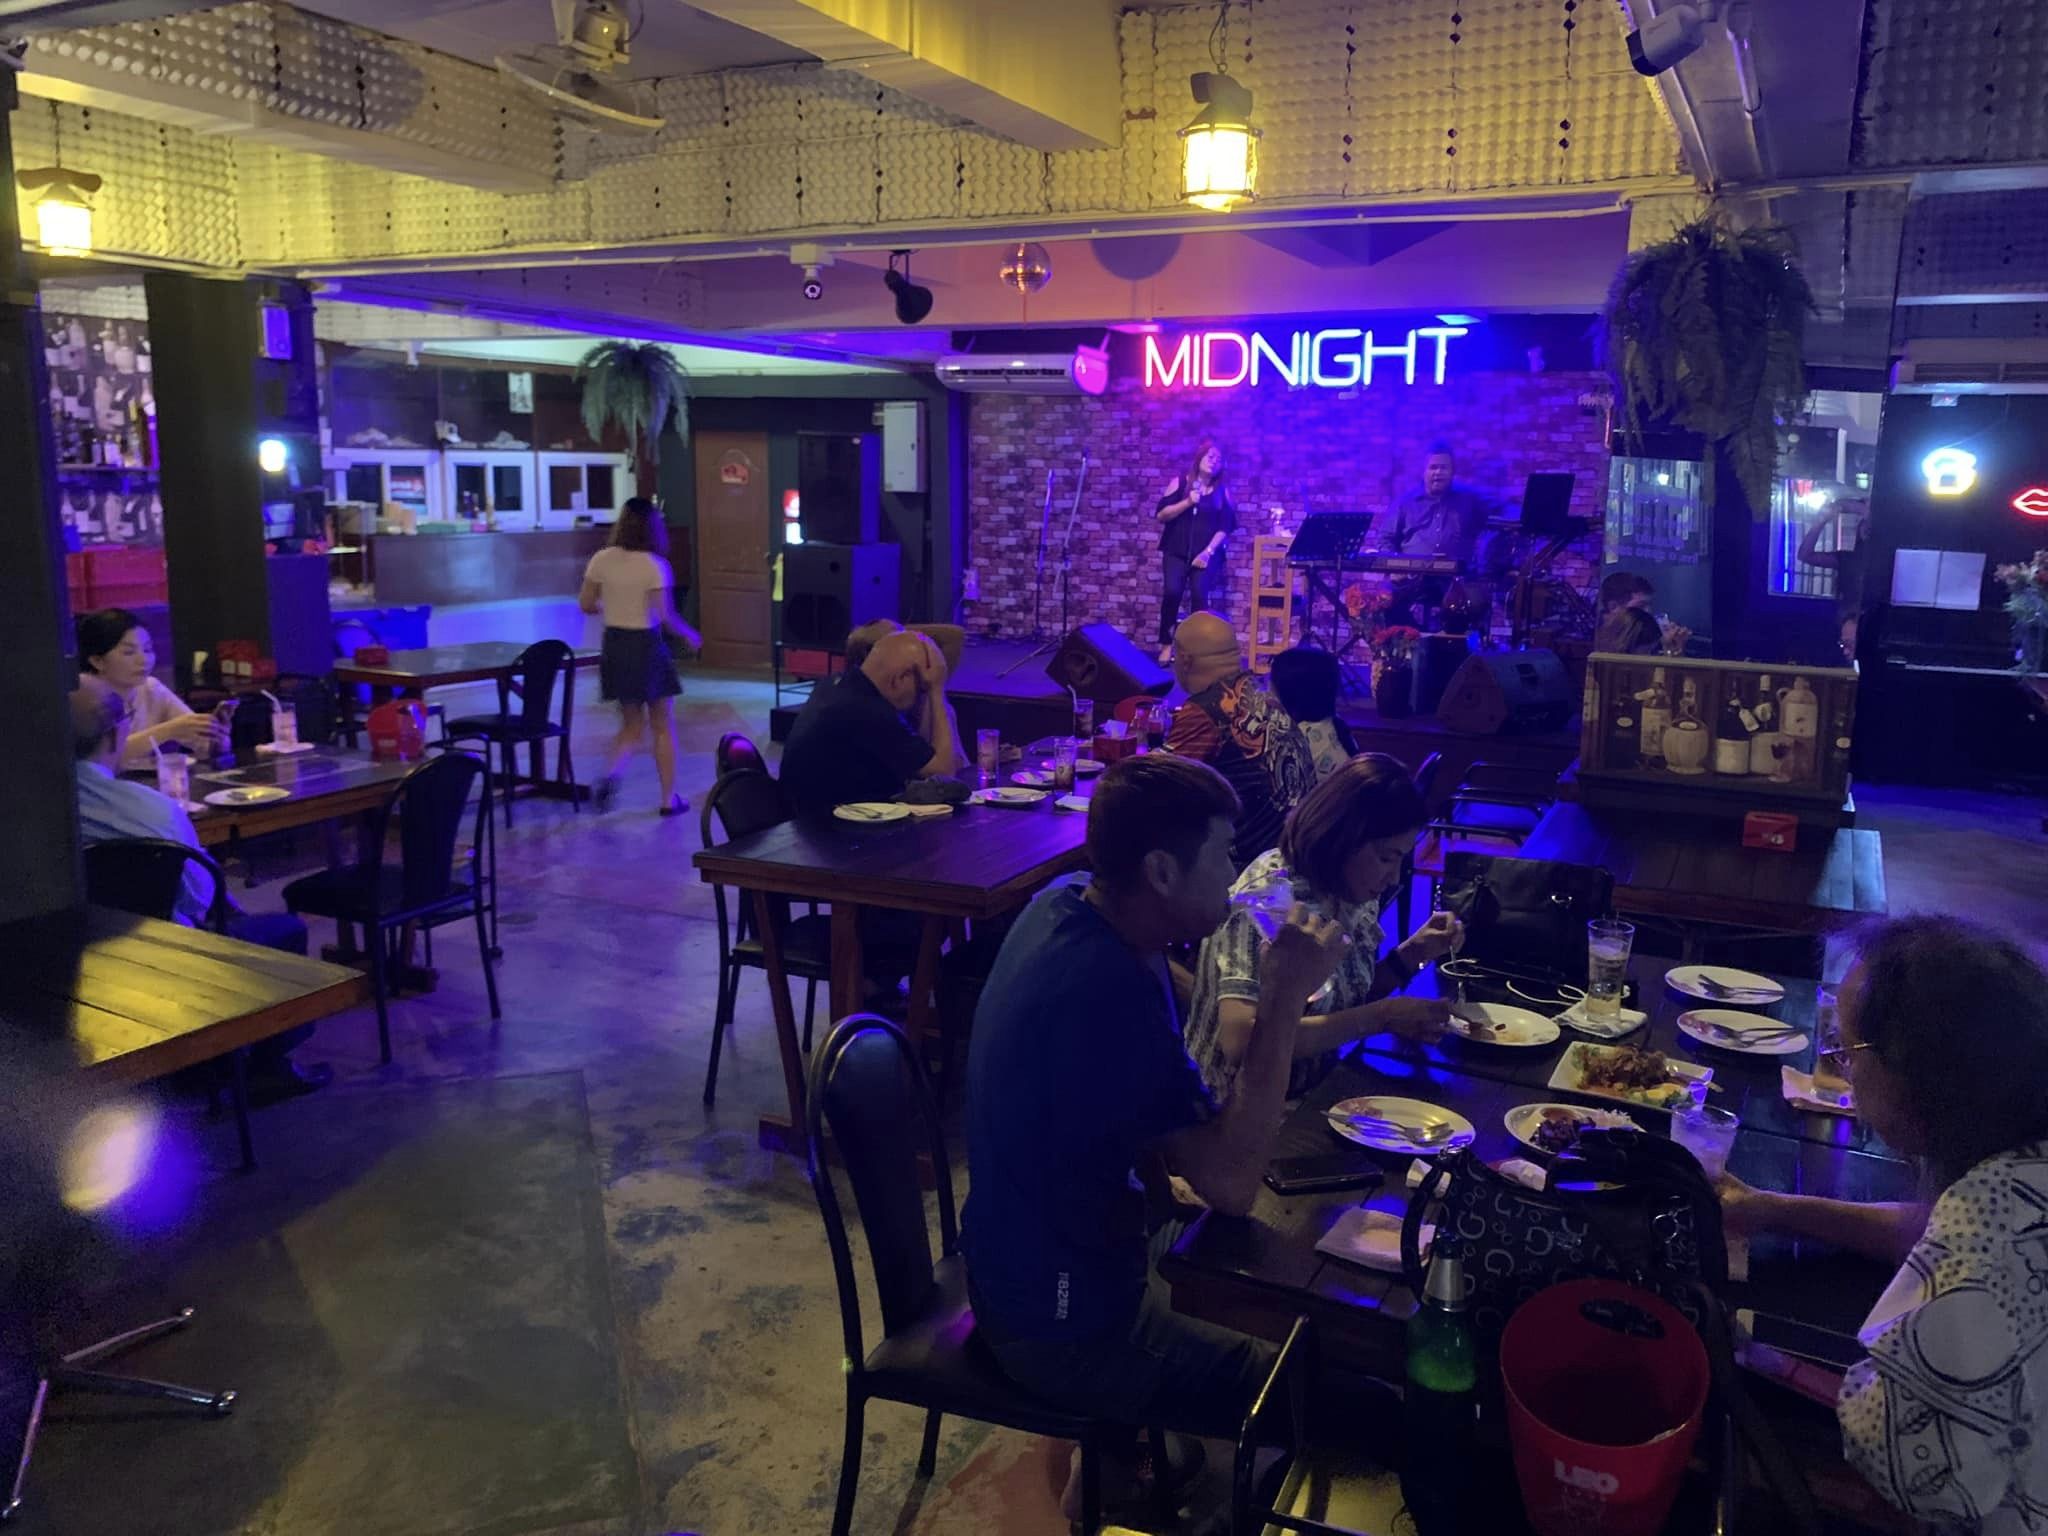 Midnight Restaurant - Nonthaburi (Midnight Restaurant - Nonthaburi) : นนทบุรี (Nonthaburi)